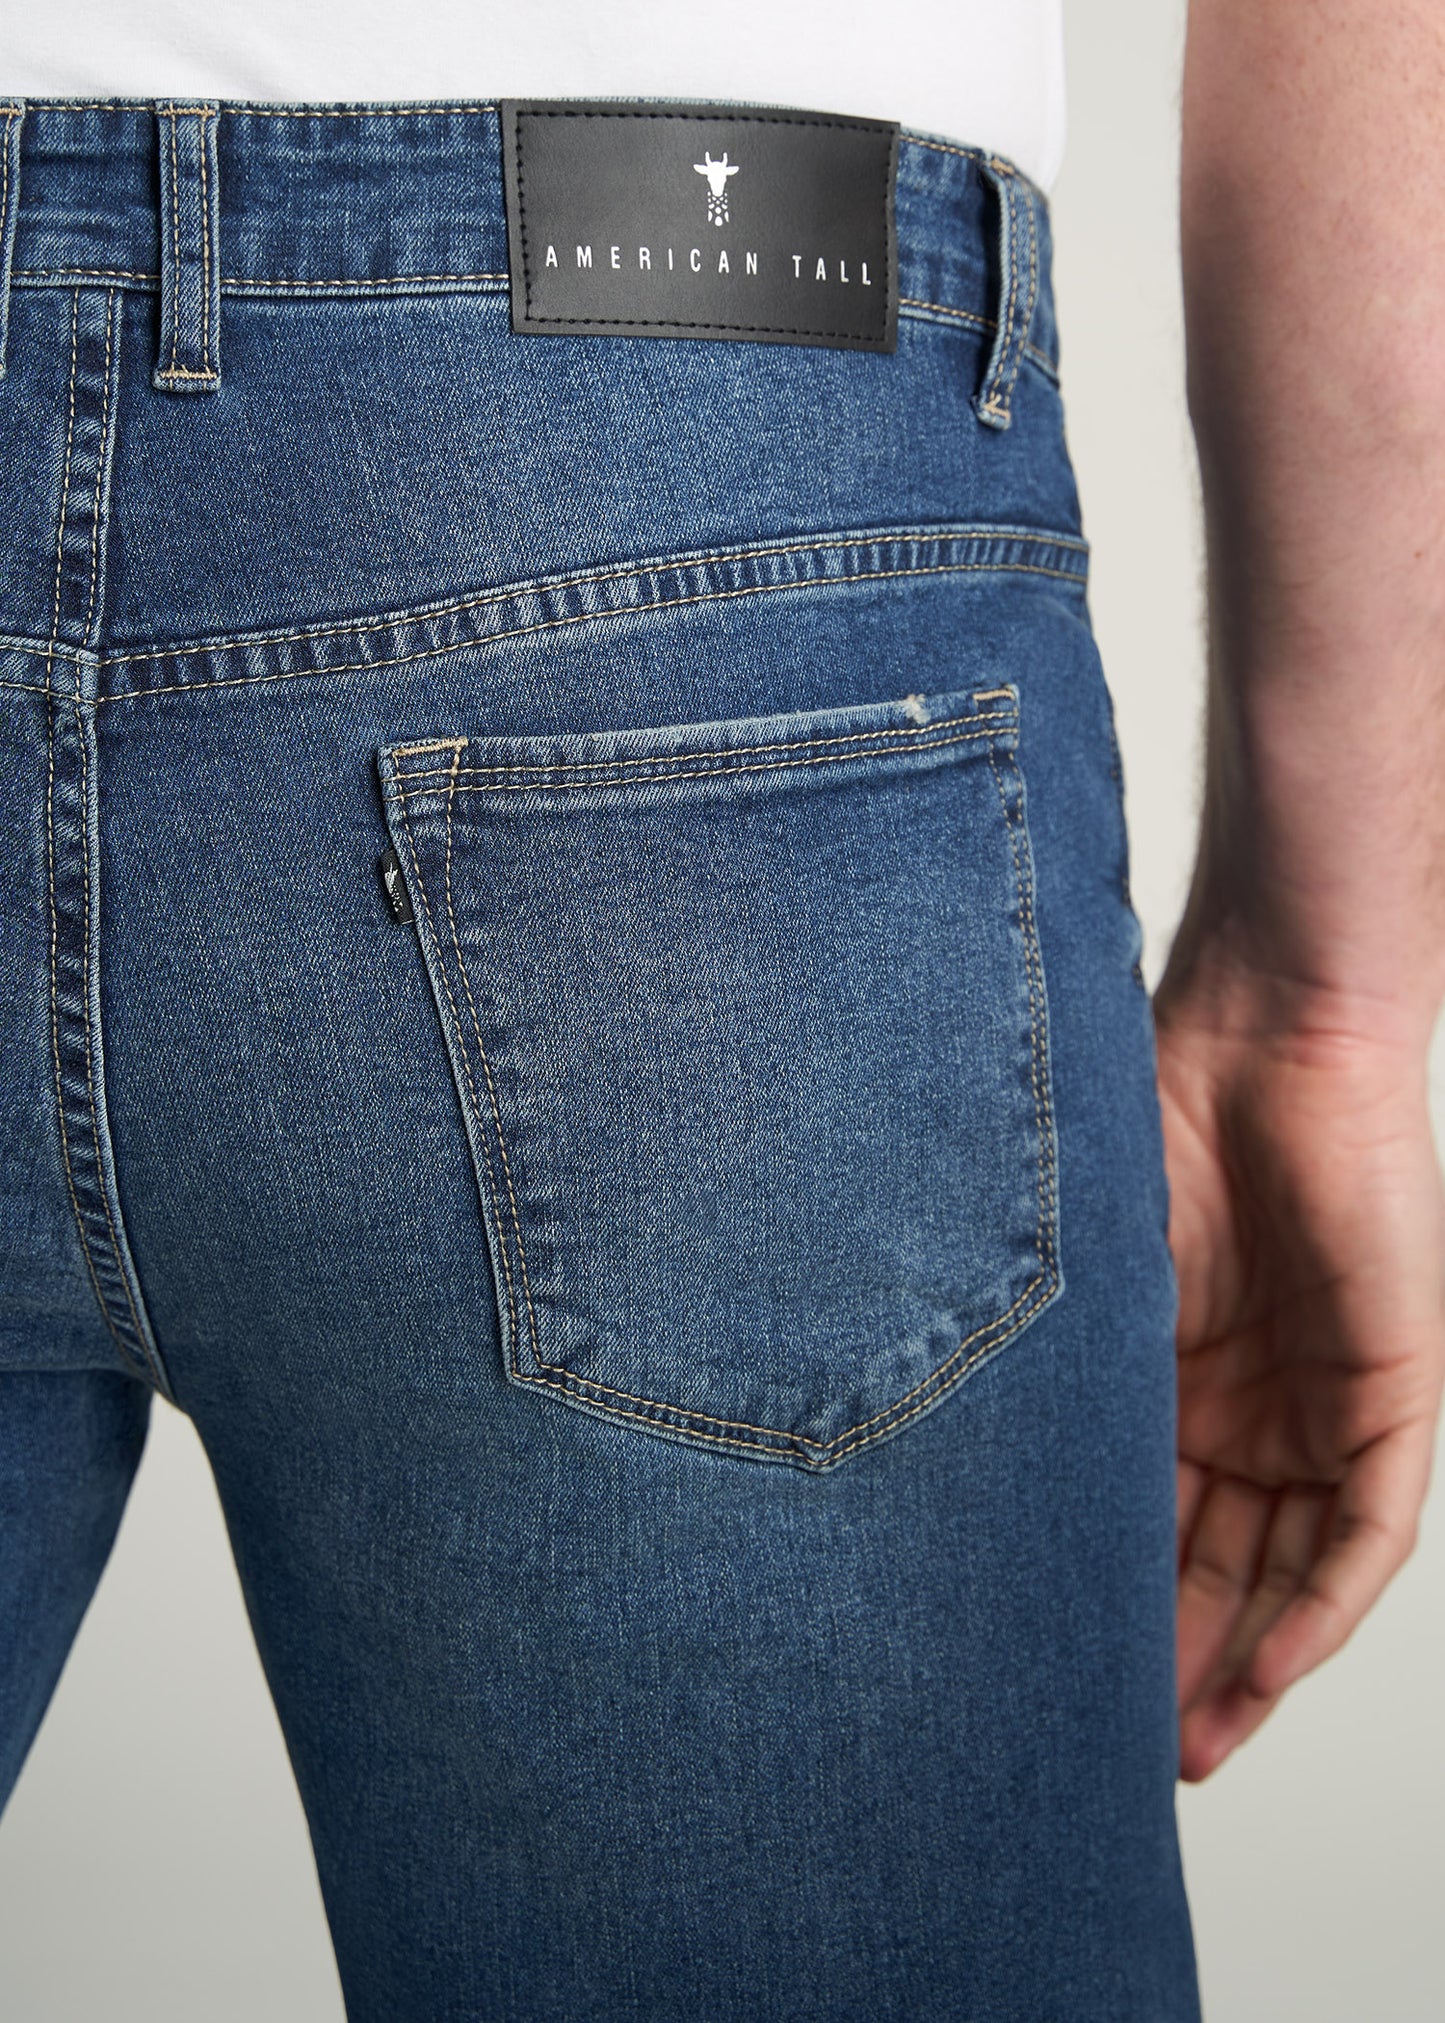     American-Tall-Men-J1-StraightLeg-Jeans-SignatureFade-detail